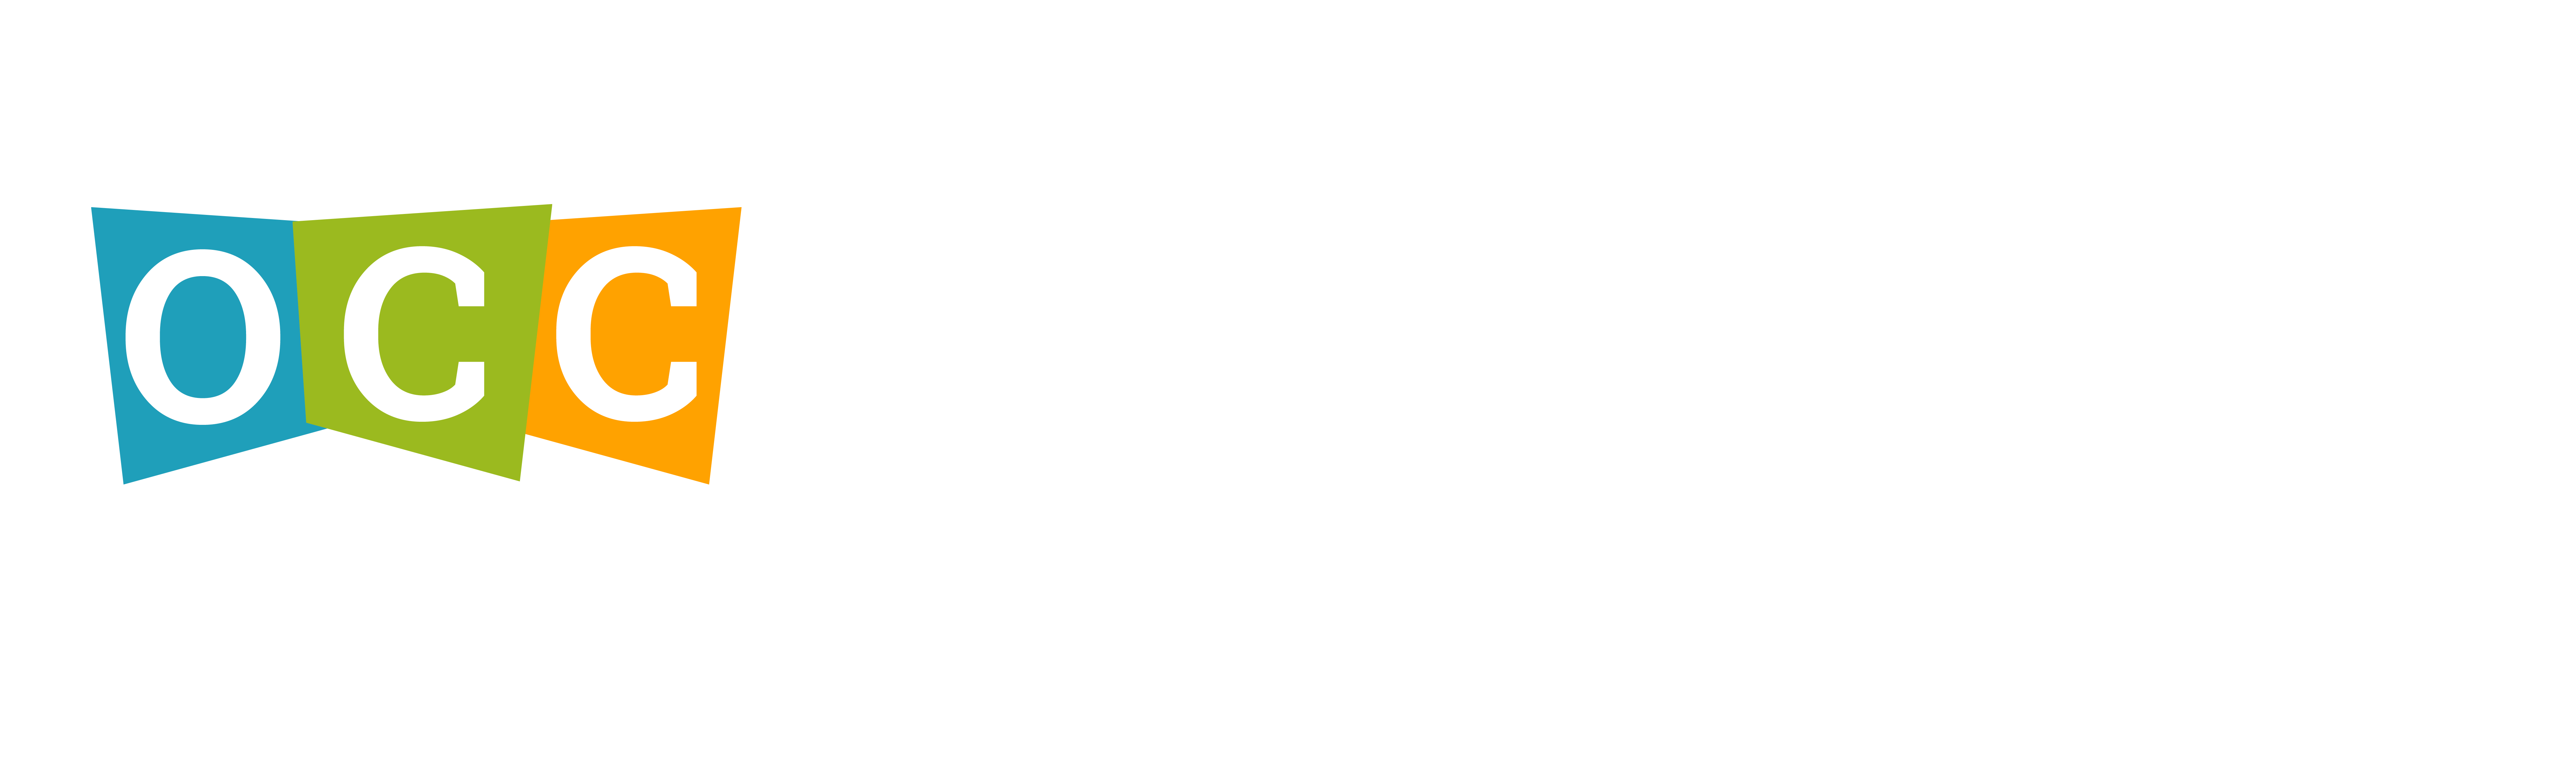 Maryland Child - We Grow With You!.